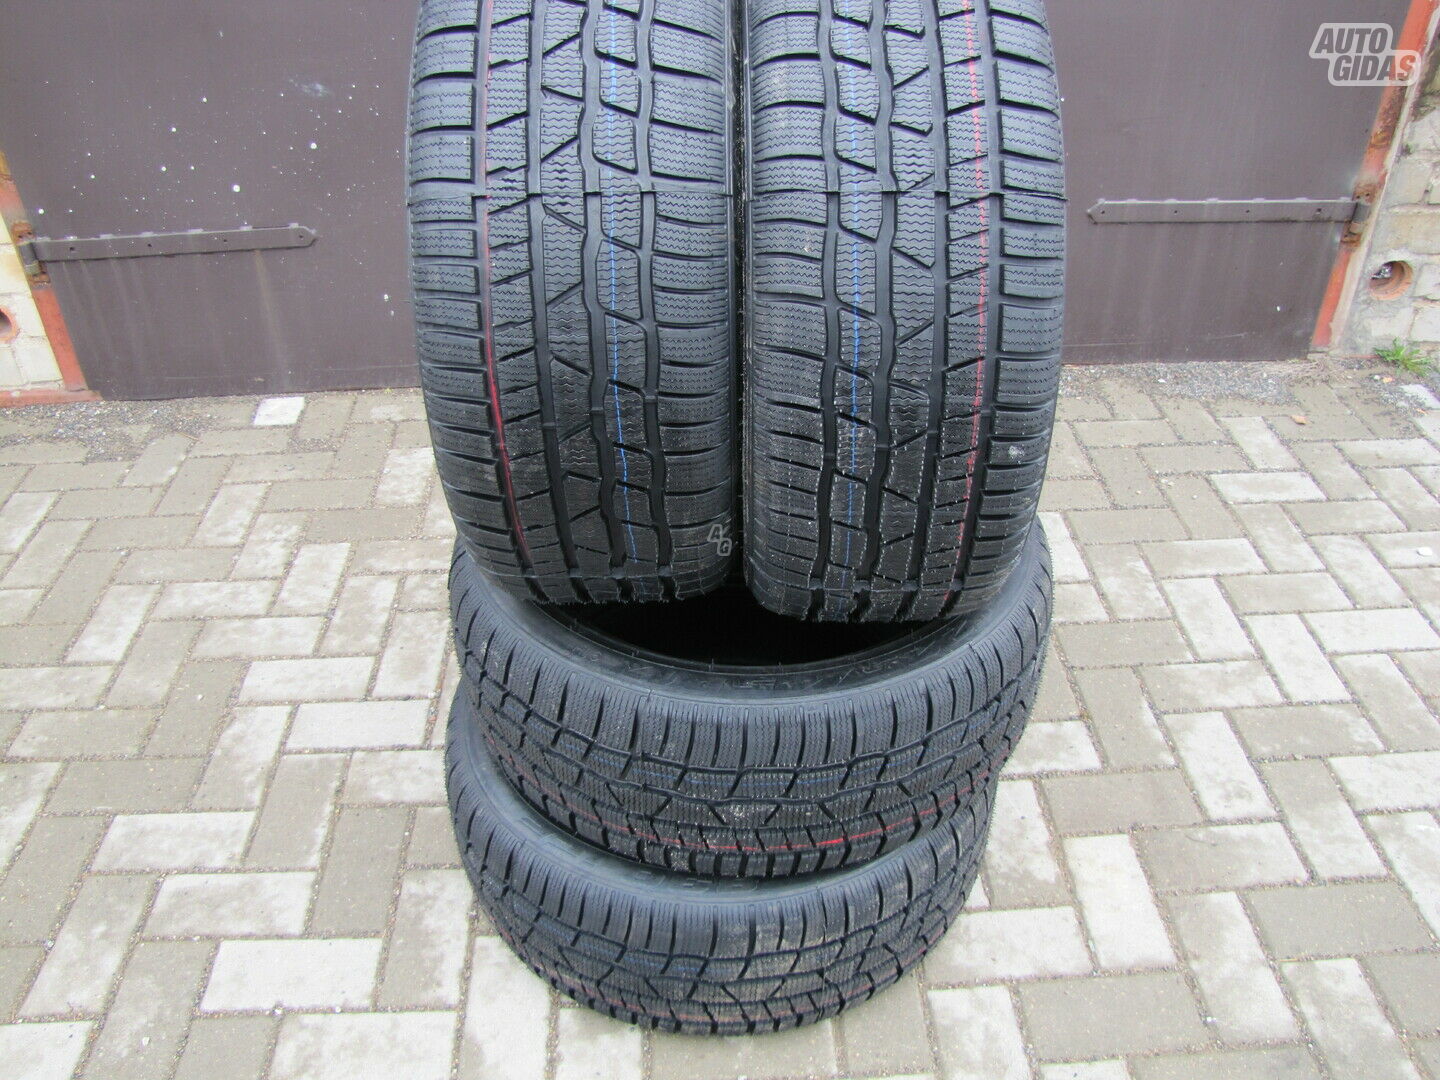 Agi AG-OPTIMA 830-ICE R17 winter tyres passanger car